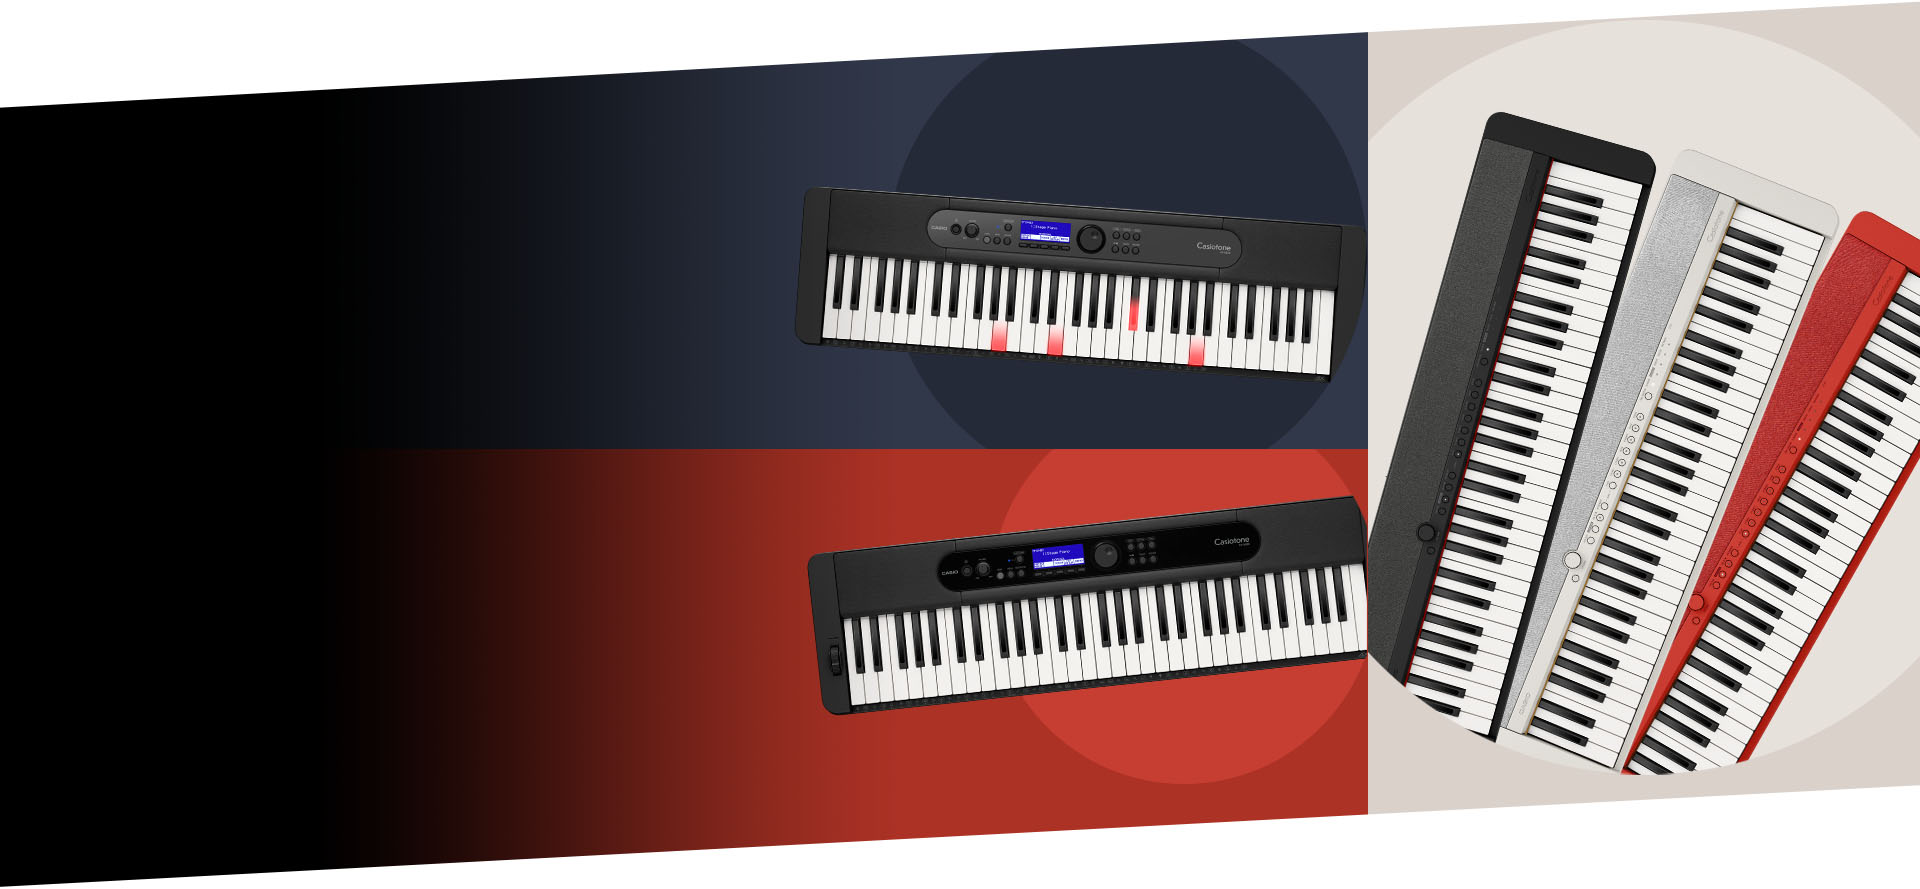 NEW Portable Keyboards - Minimalist Design, High Quality Sound